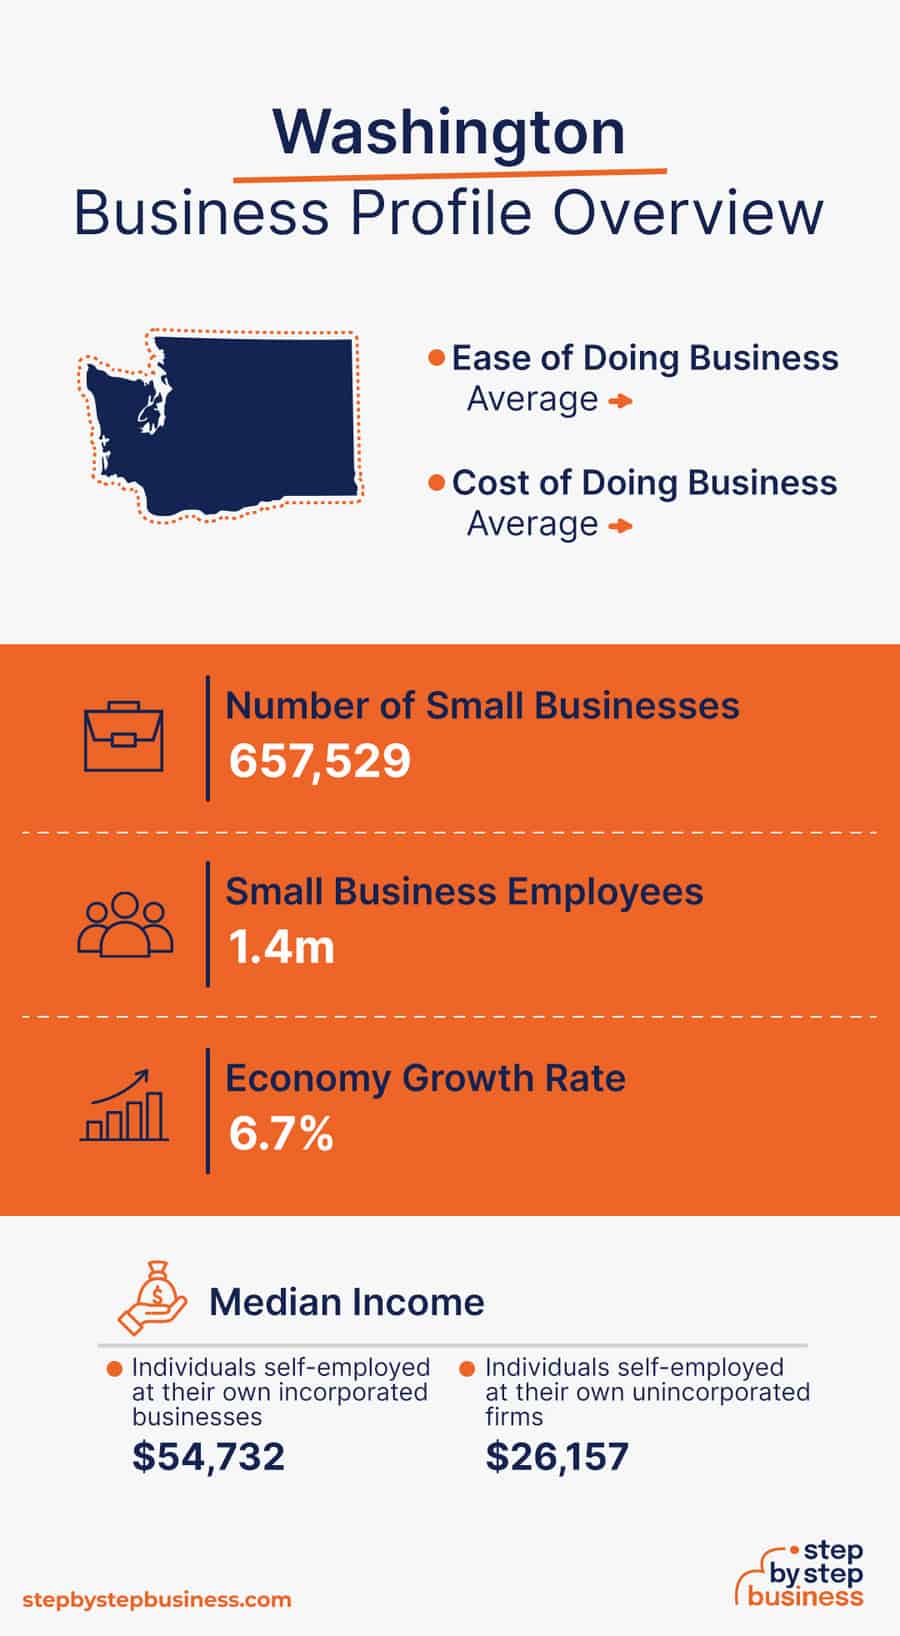 Washington Business Profile Overview